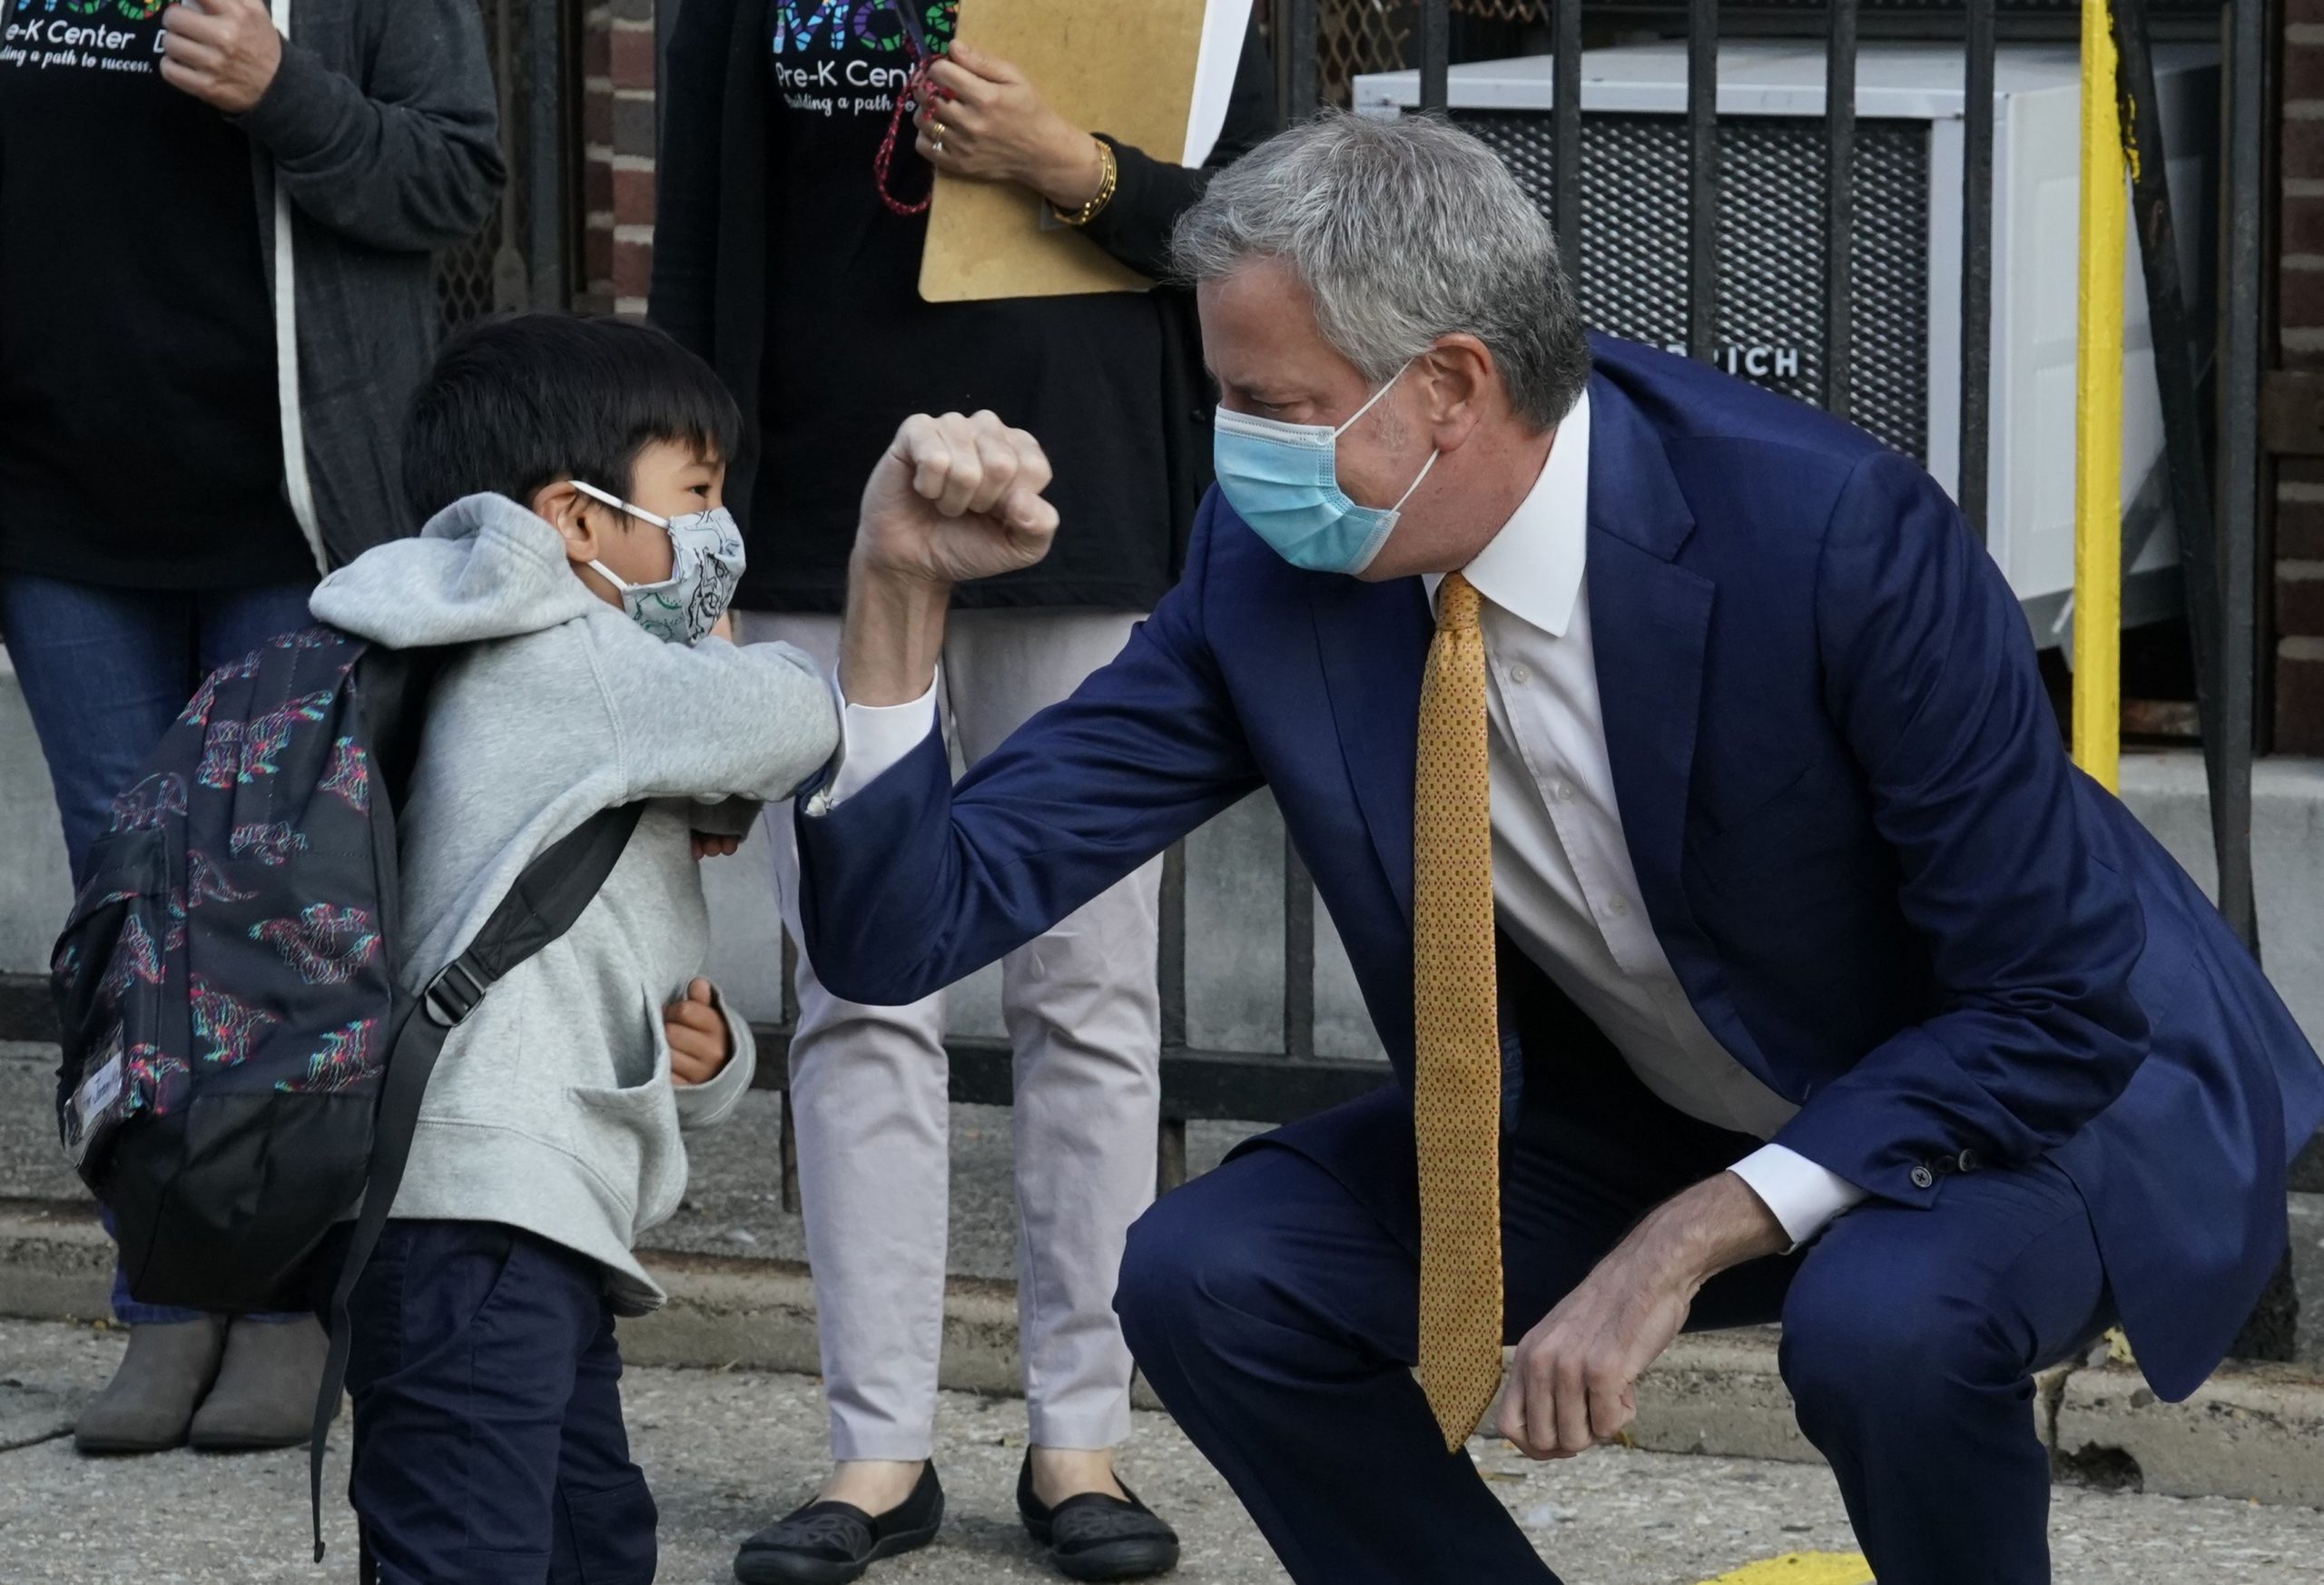 NYC Mayor’s hesitance to mandate masks ‘baffles’ Councilman